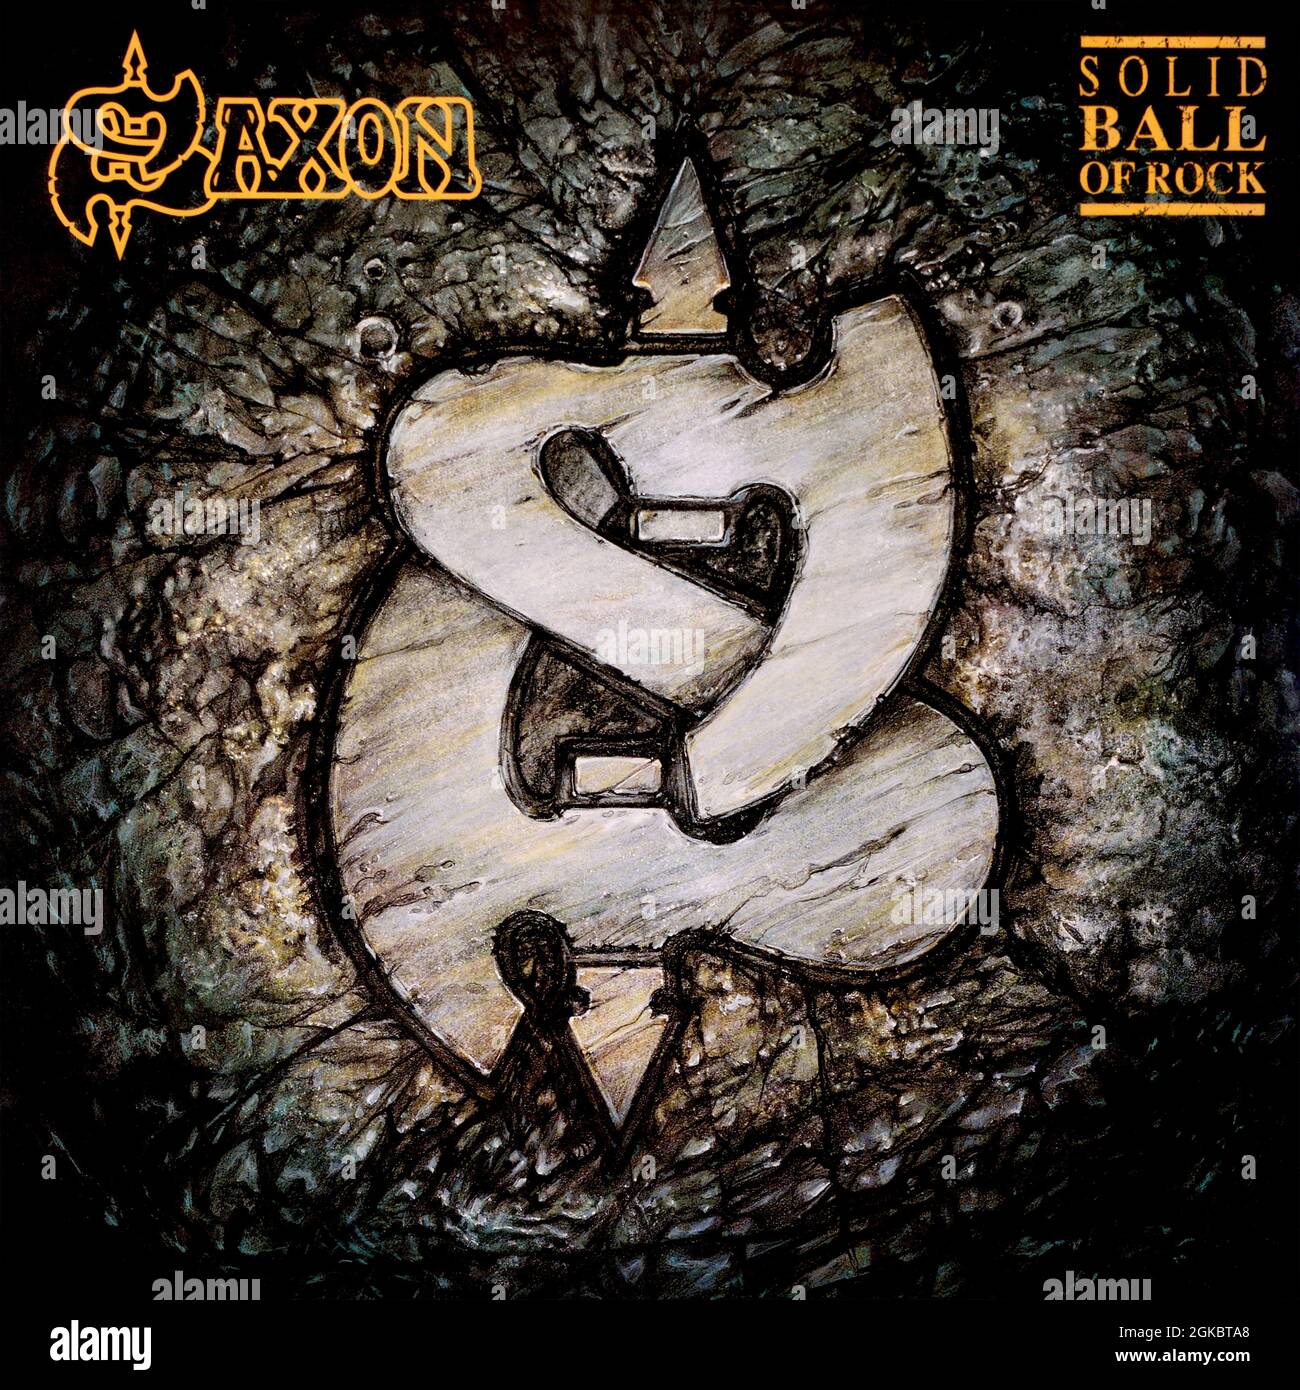 Saxon - original Vinyl Album Cover - Solid Ball of Rock - 1990 Stockfoto